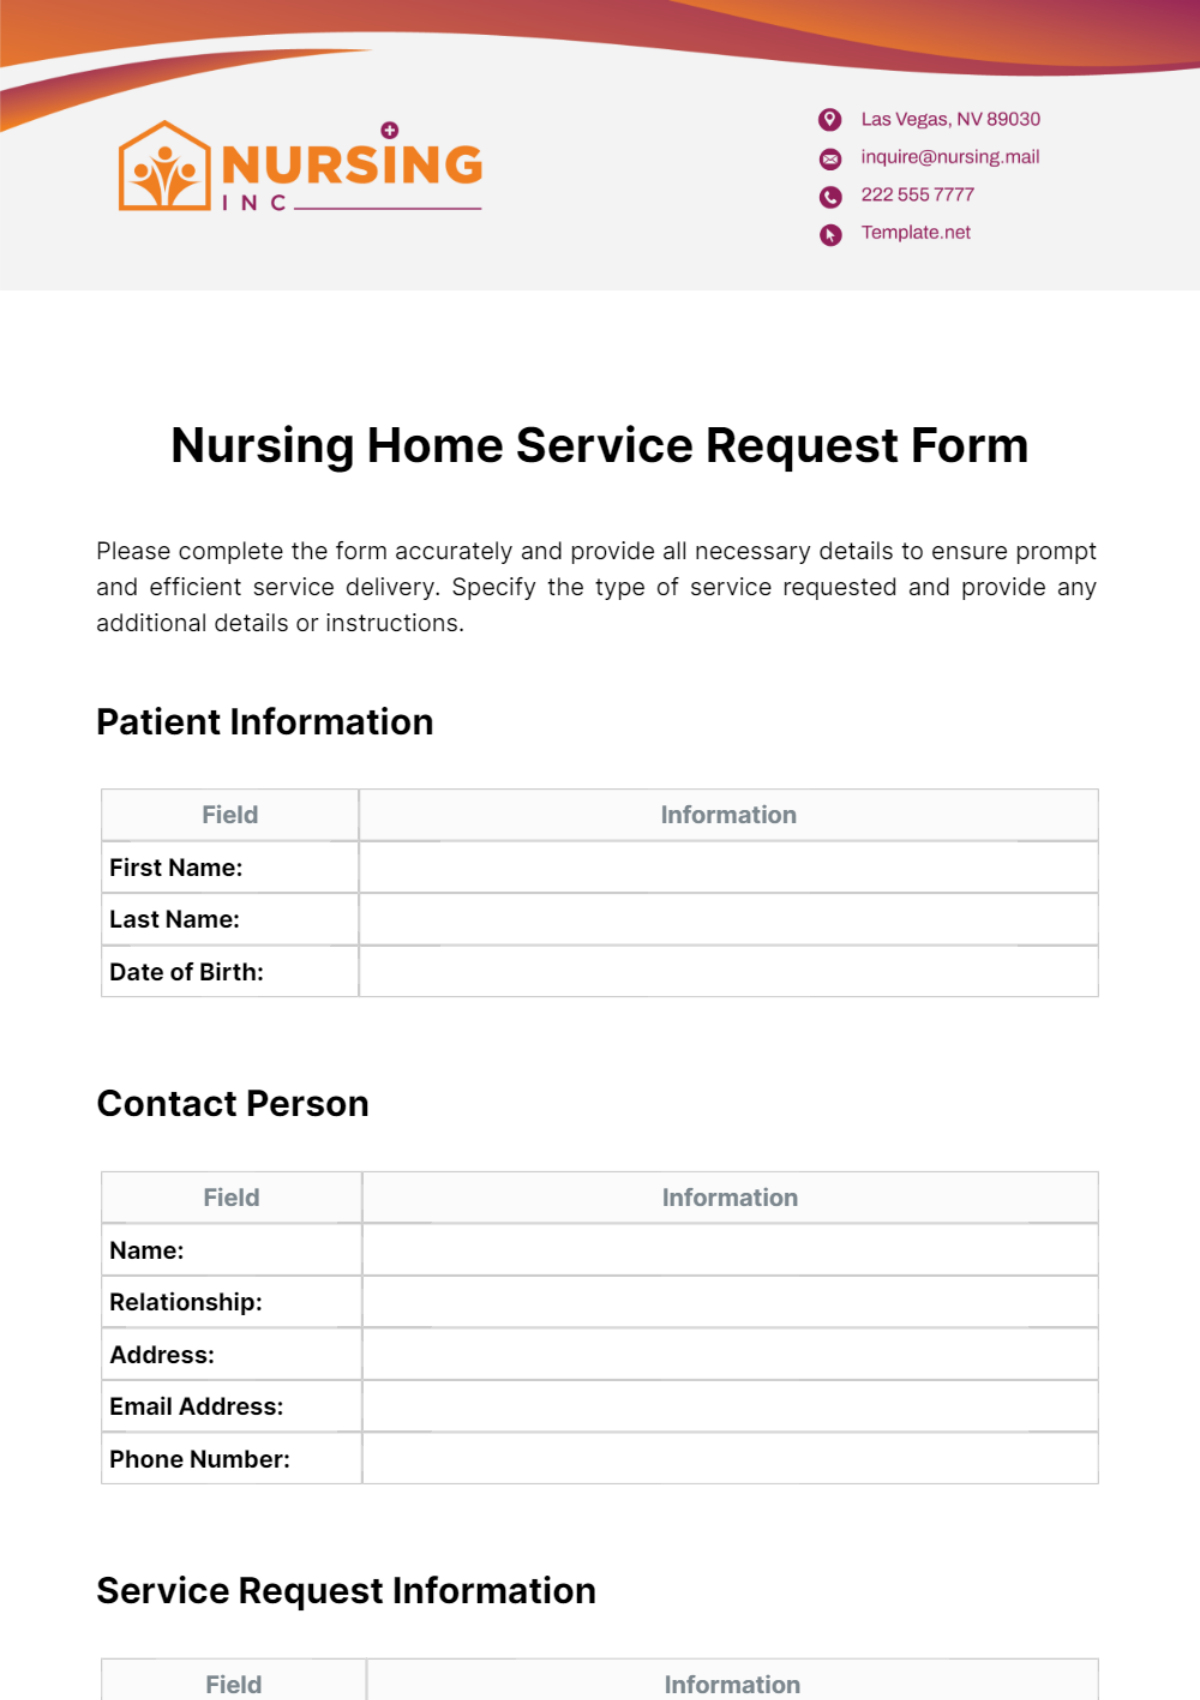 Nursing Home Service Request Form Template